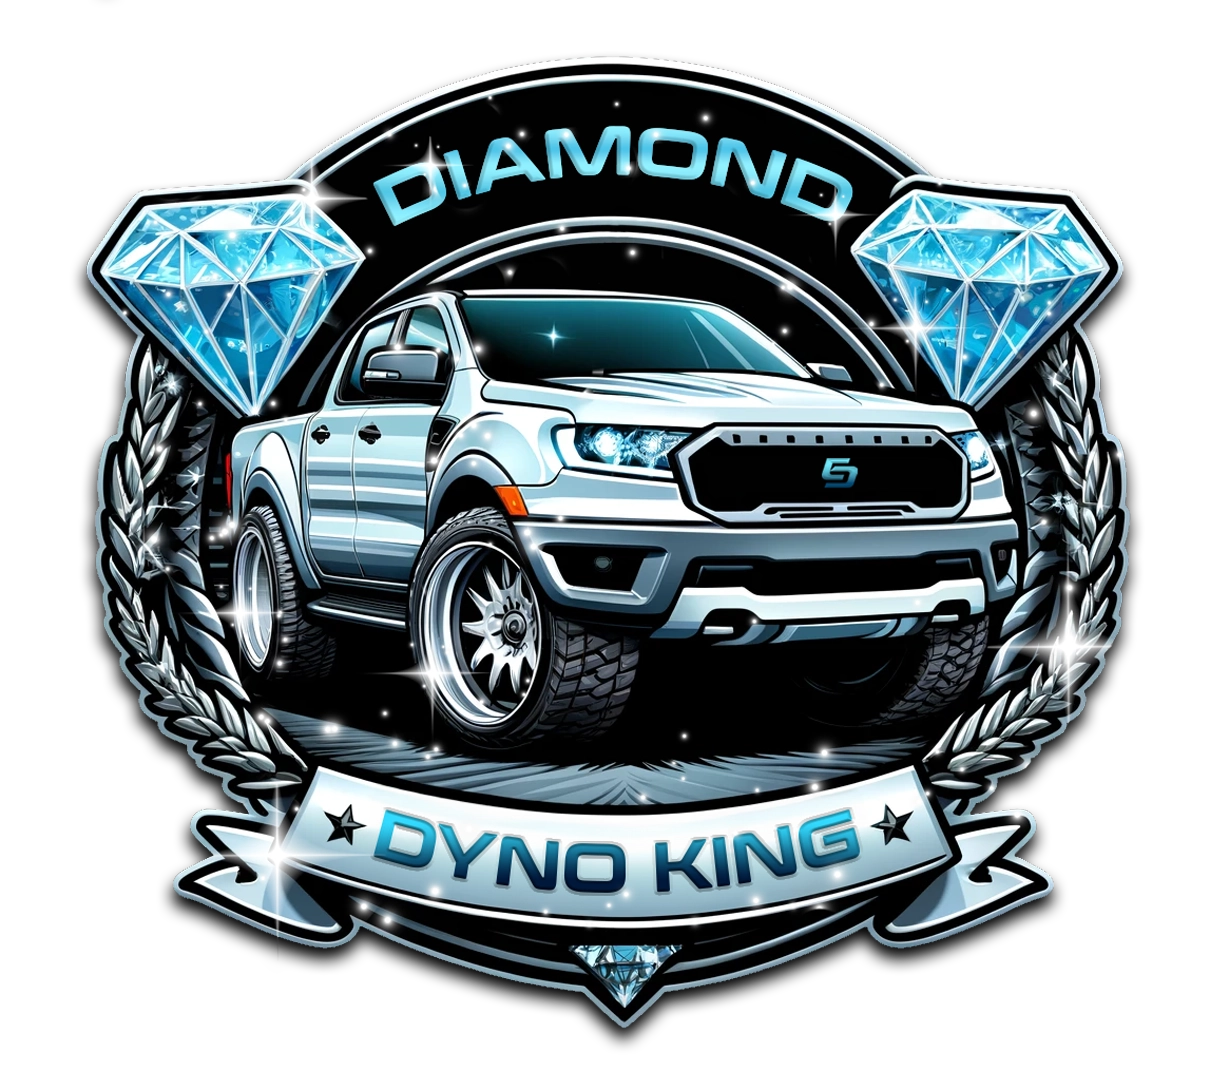 Dyno king badge- diamond affiliate